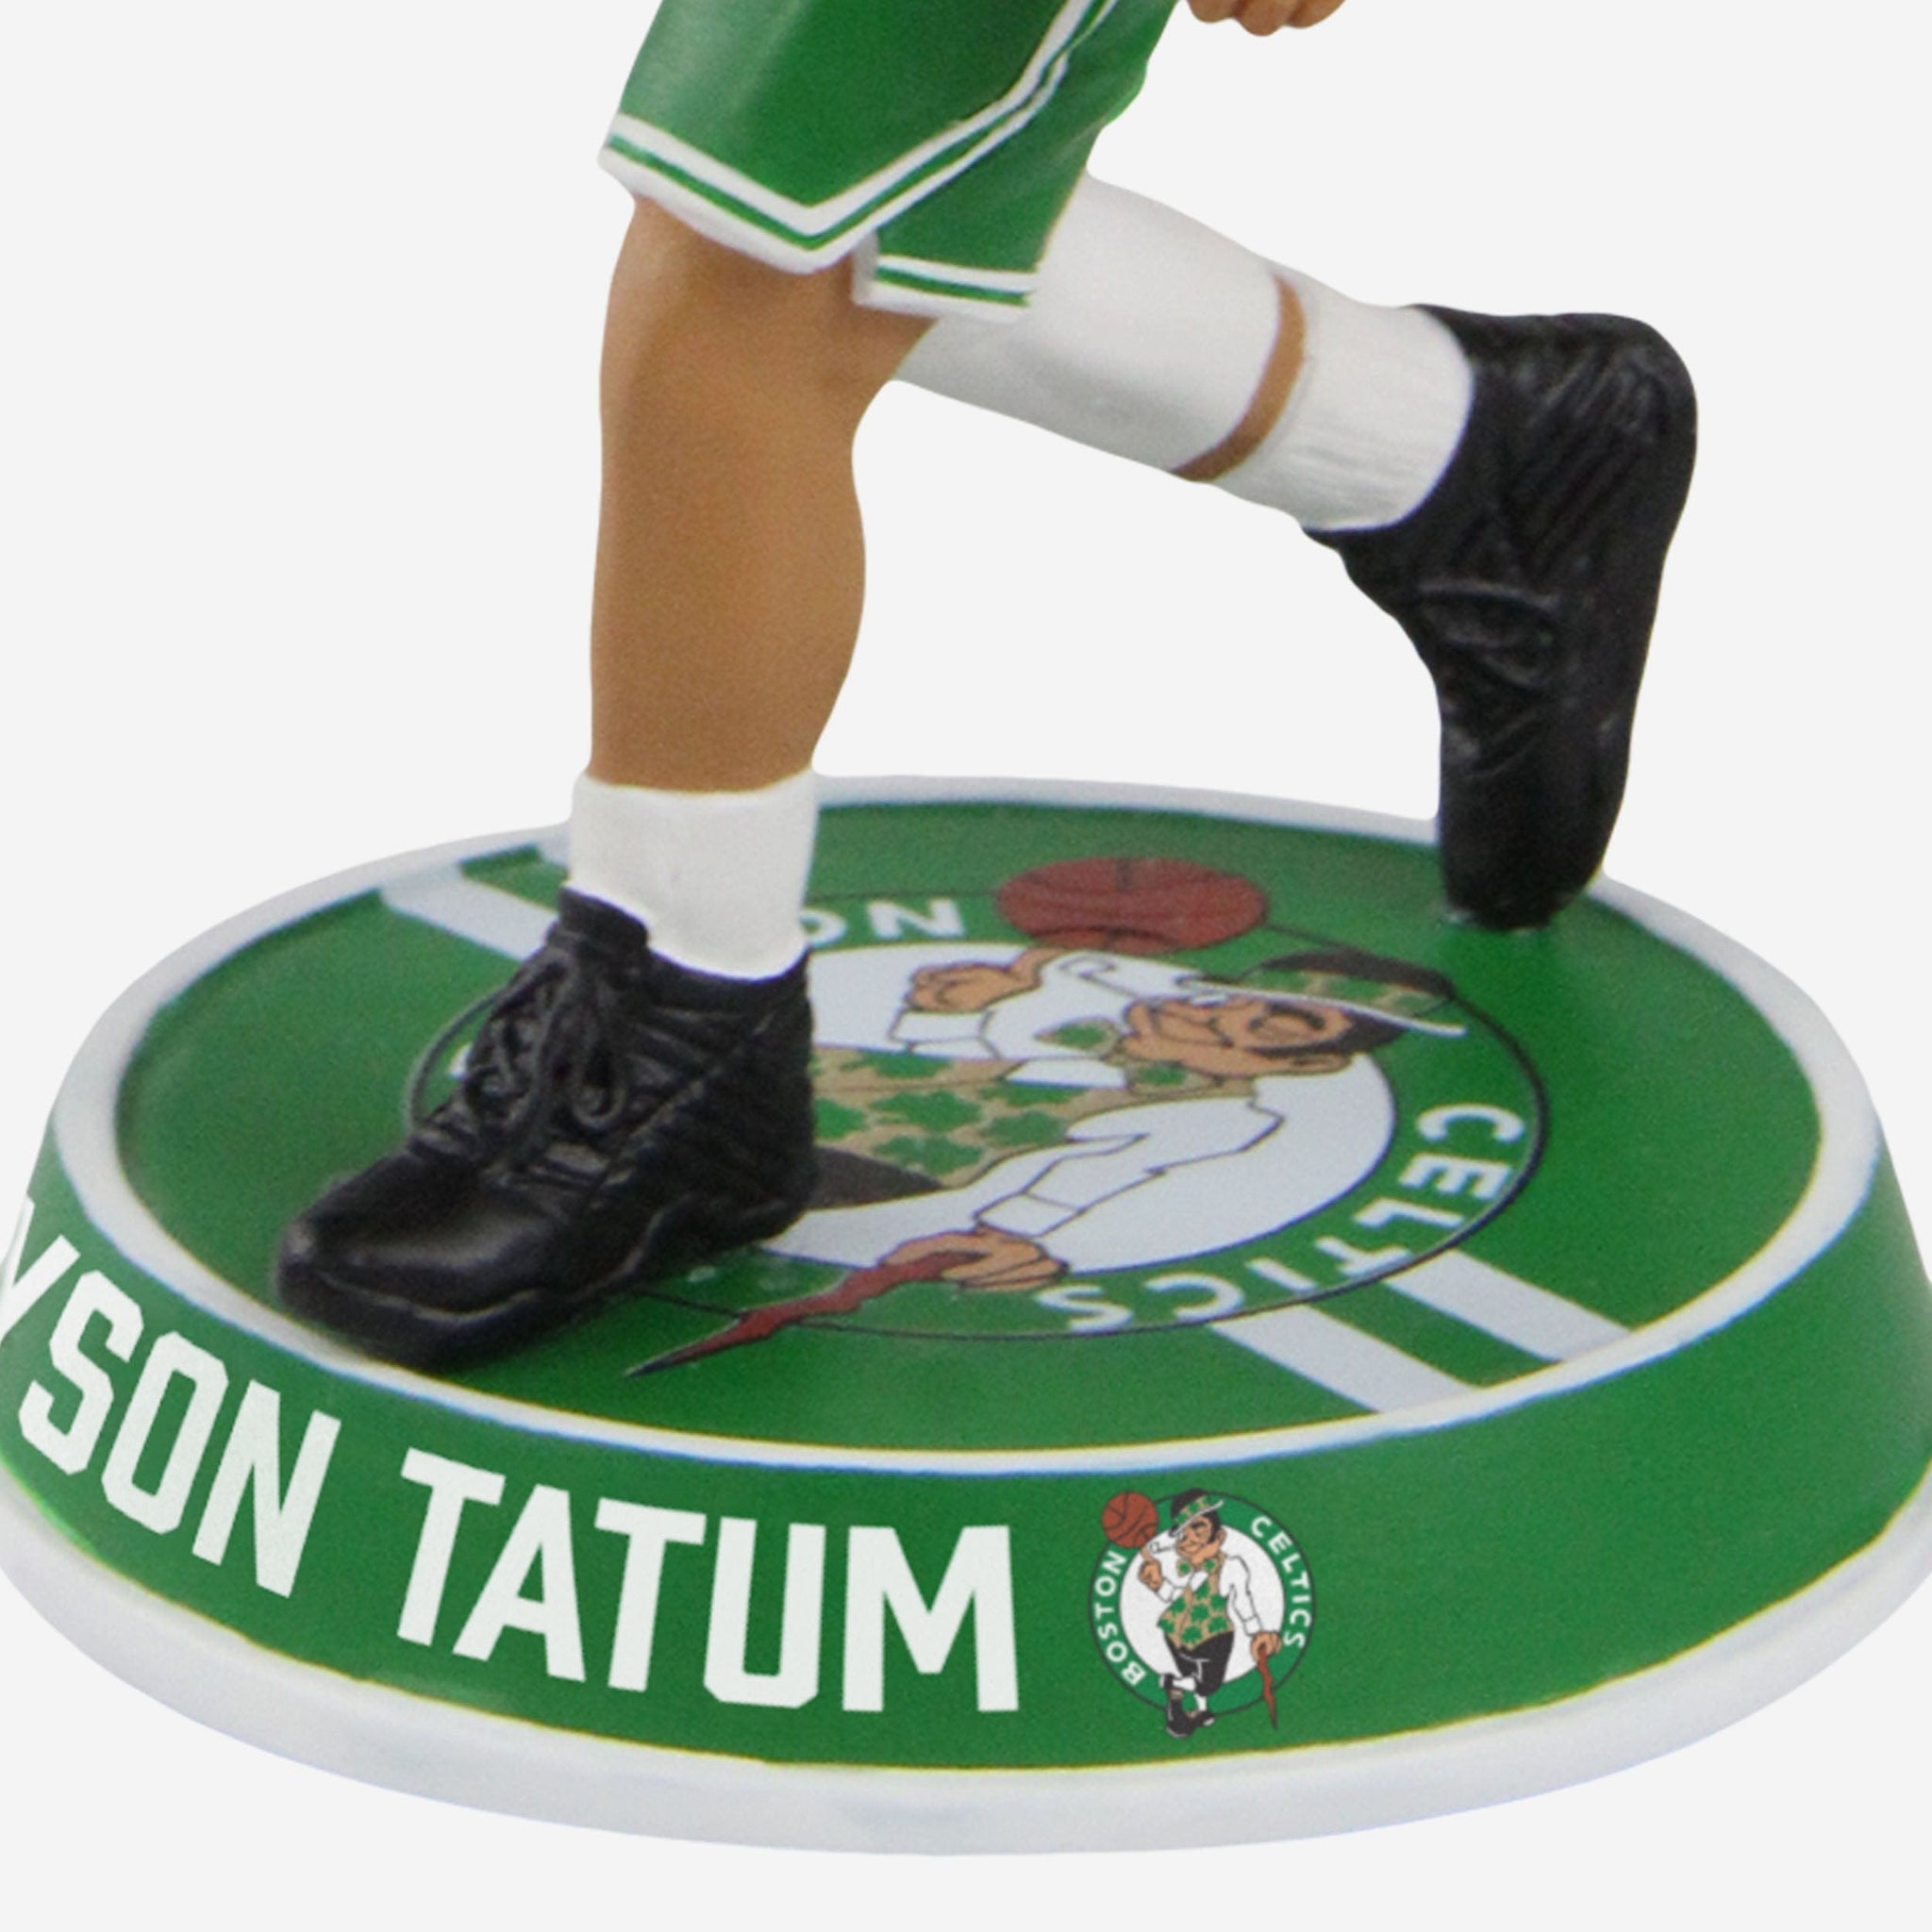 You can get a Jayson Tatum bobblehead at Busch Stadium this summer